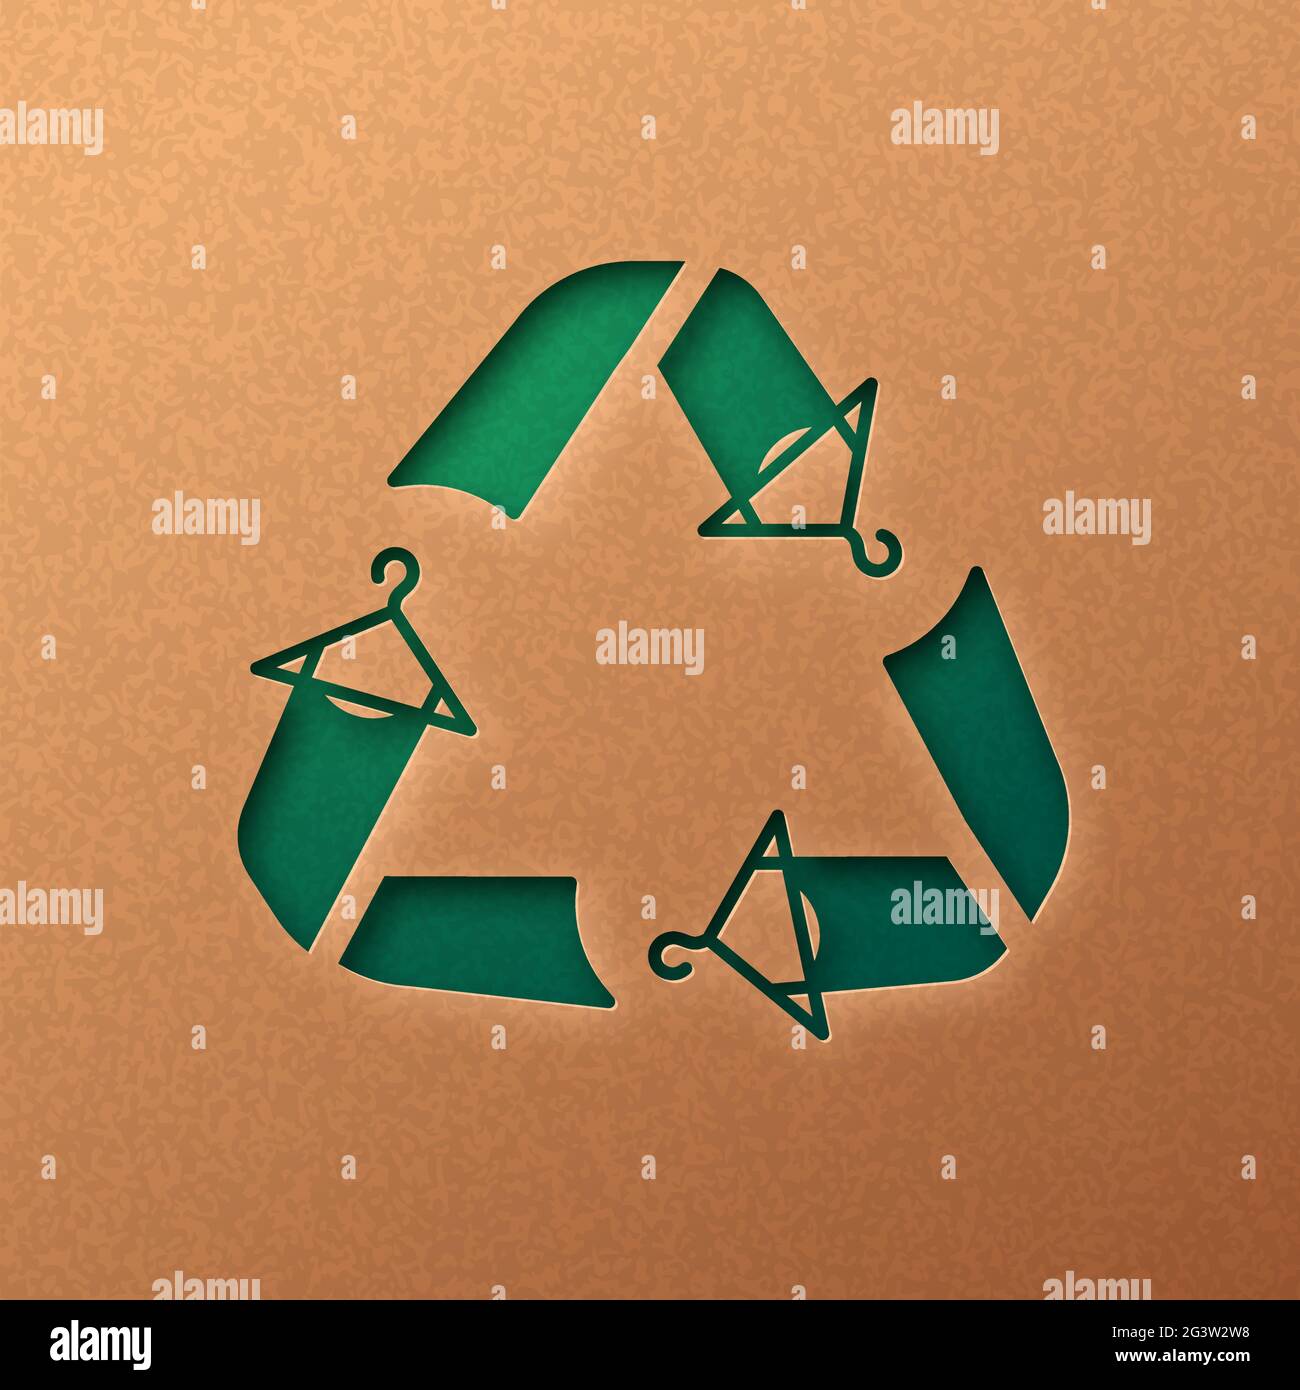 Recyceln Kleidung papercut Illustration Konzept mit grünen Kleiderbügel Pfeil-Symbol. 3D Upcycling Ausschnitt Handwerk Design in recyceltem Papier Hintergrund. Stock Vektor